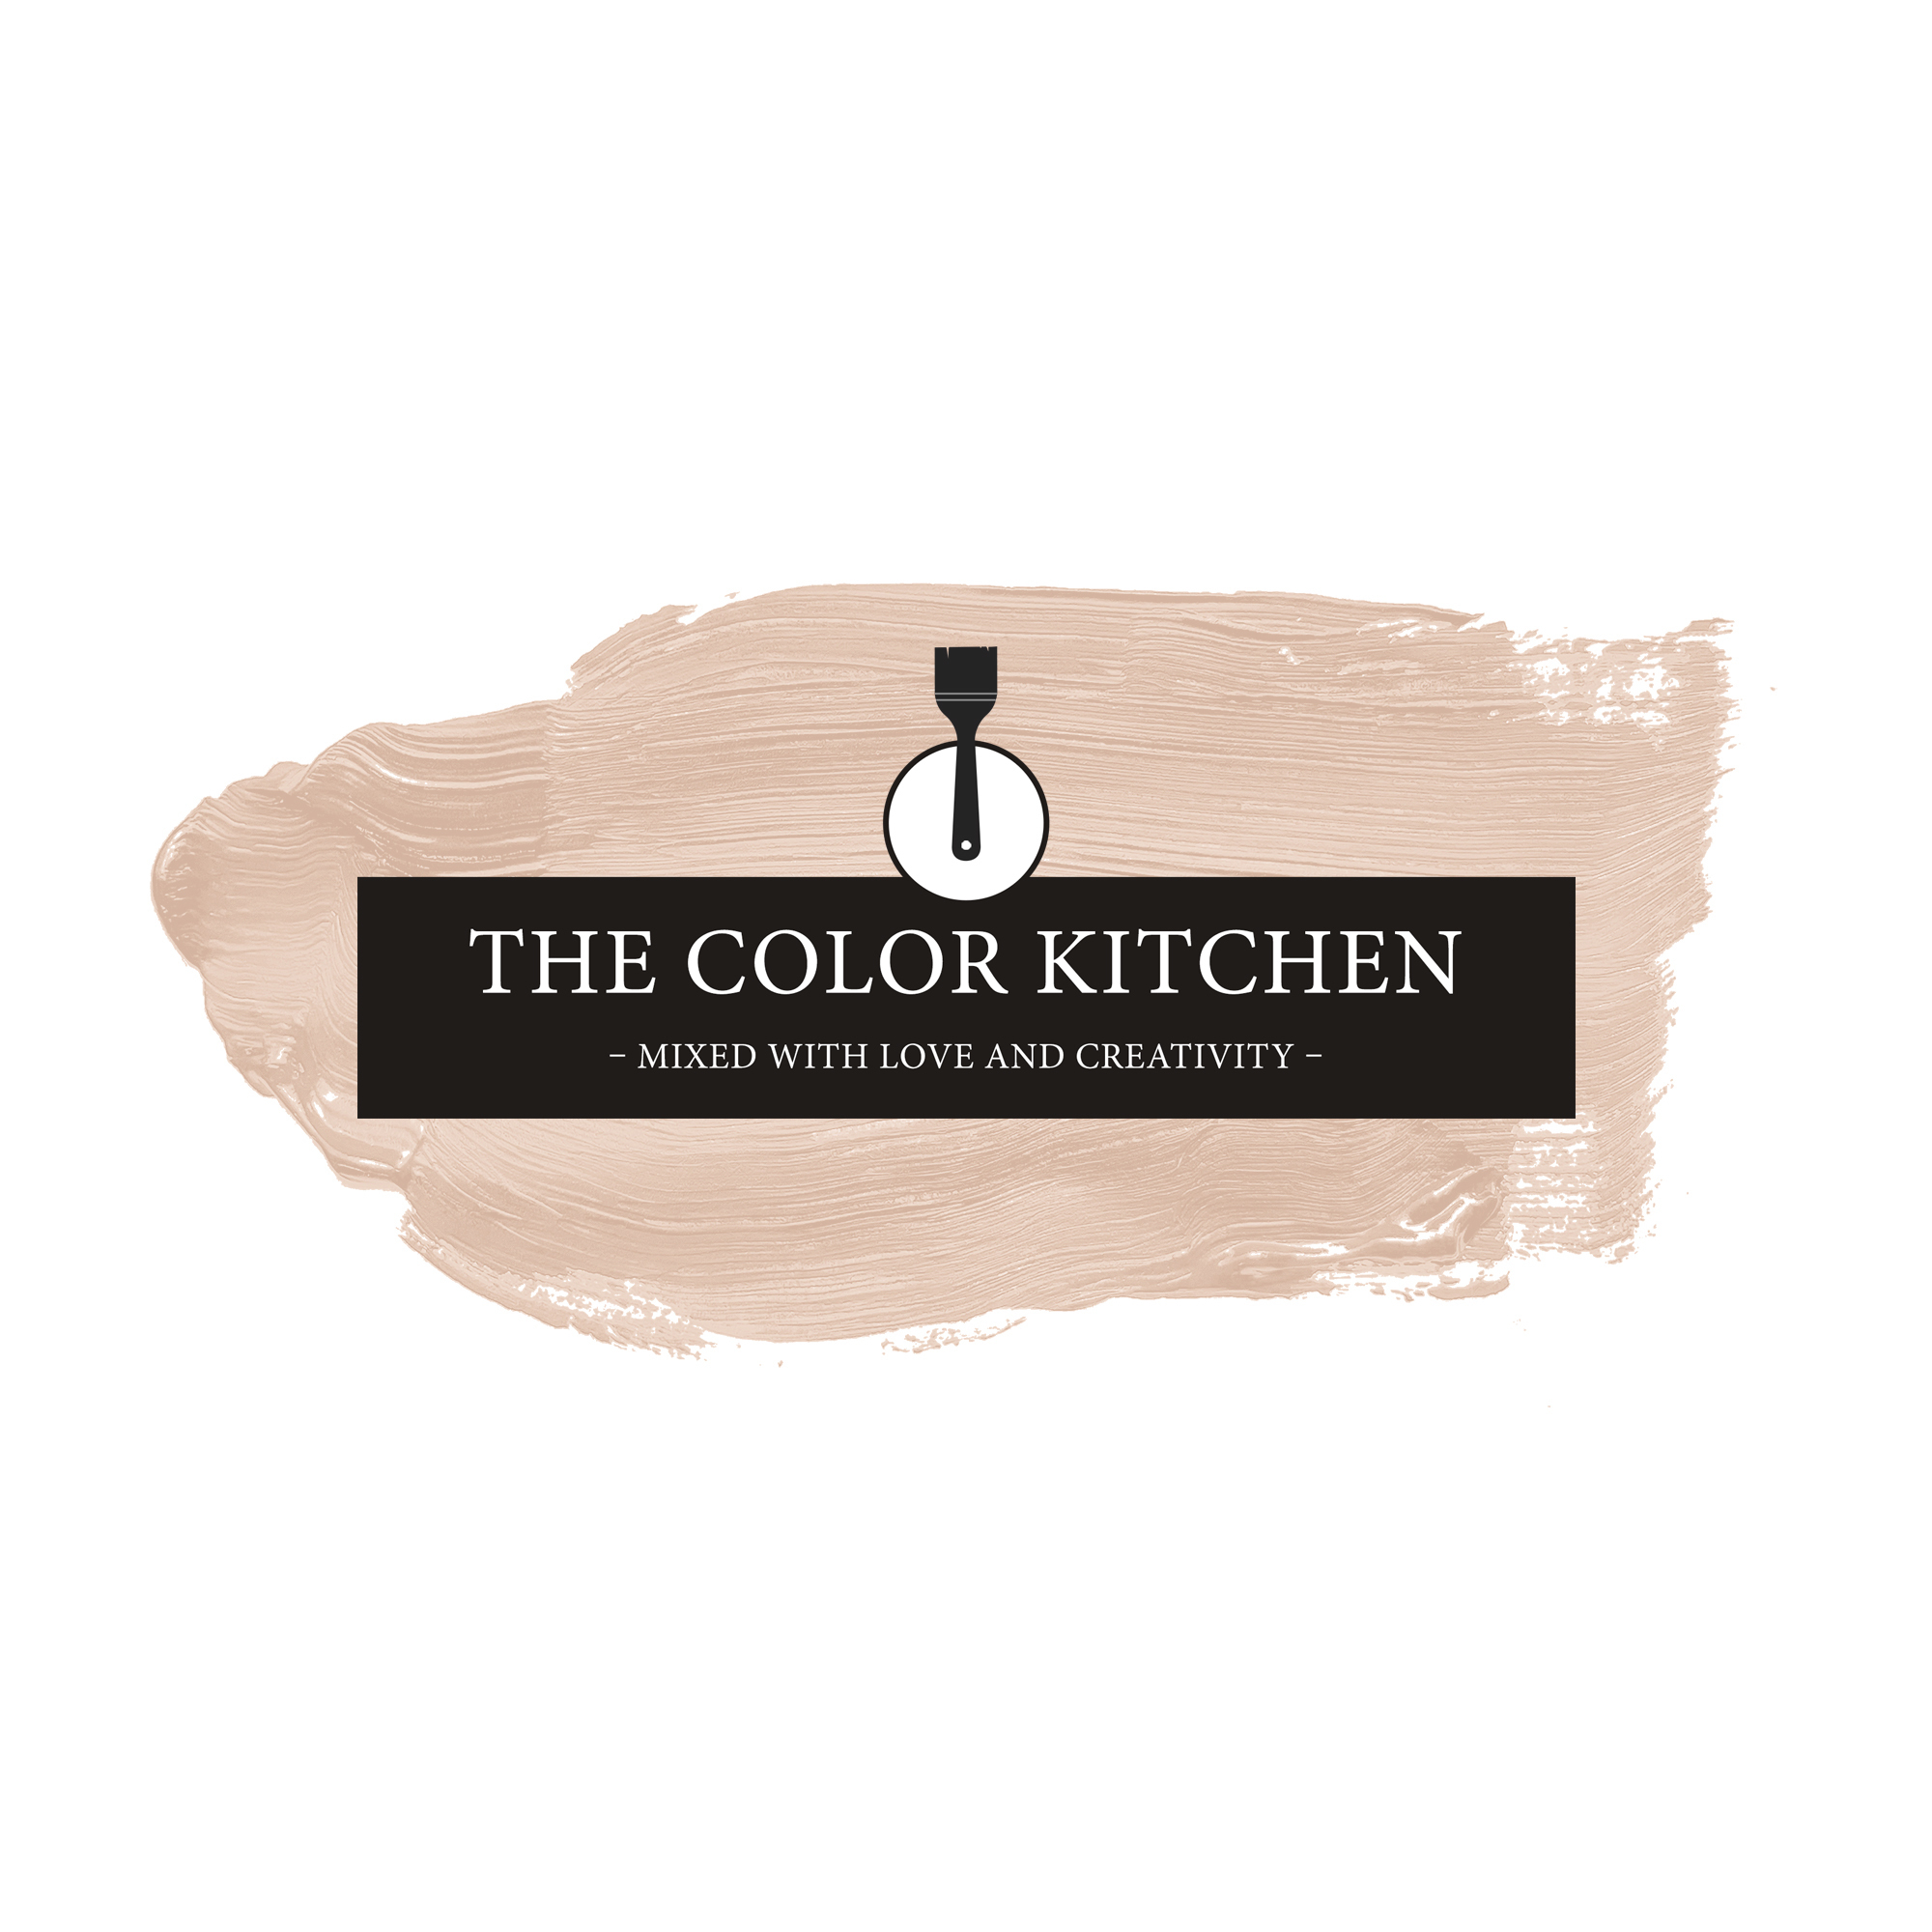 The Color Kitchen Himalaya Salt 2,5 l